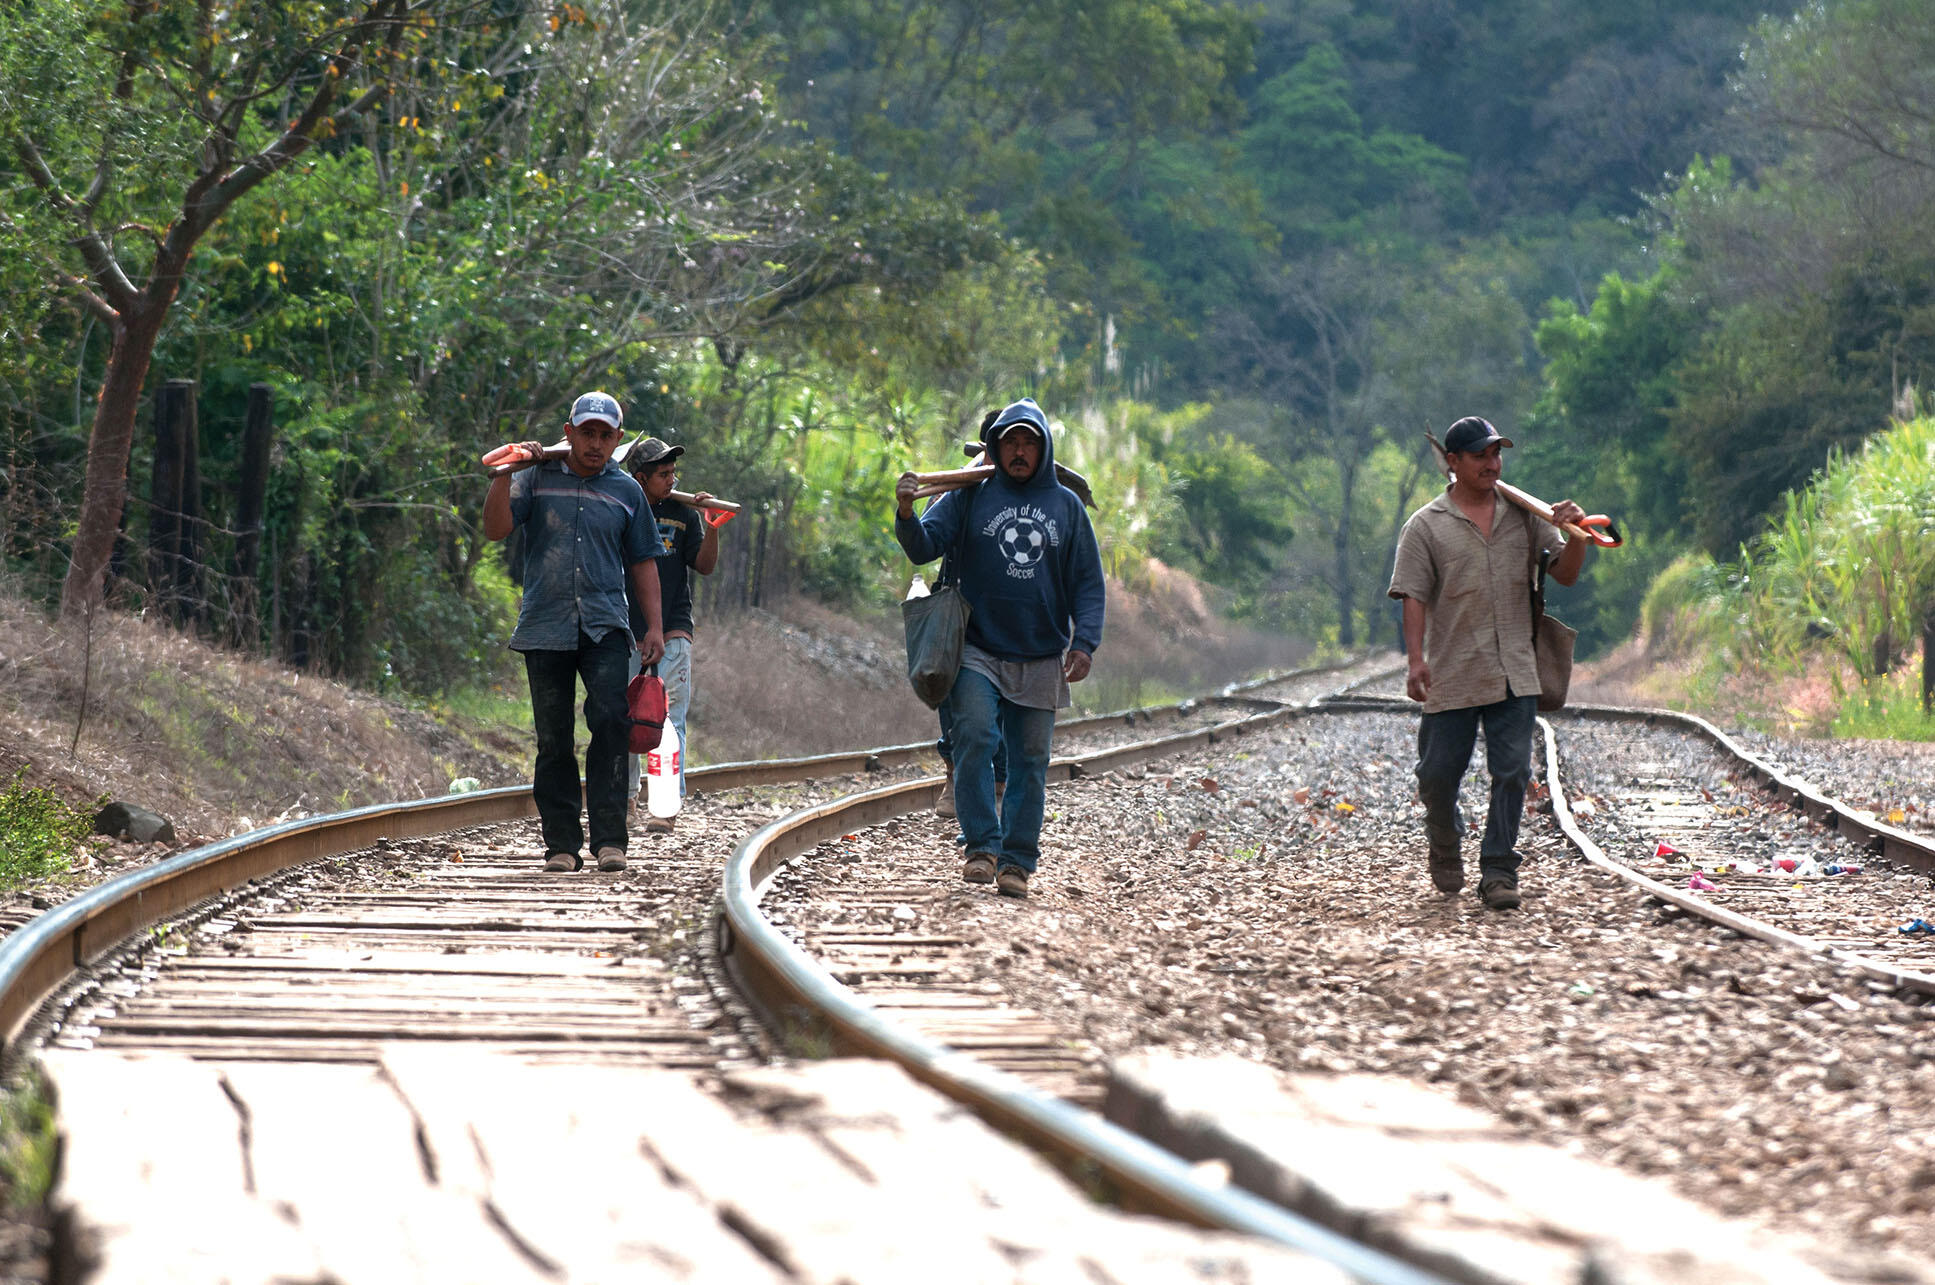 Ejidatarios walk down railroad tracks returning from a communal project. (Photo by Eneas De Troya.)